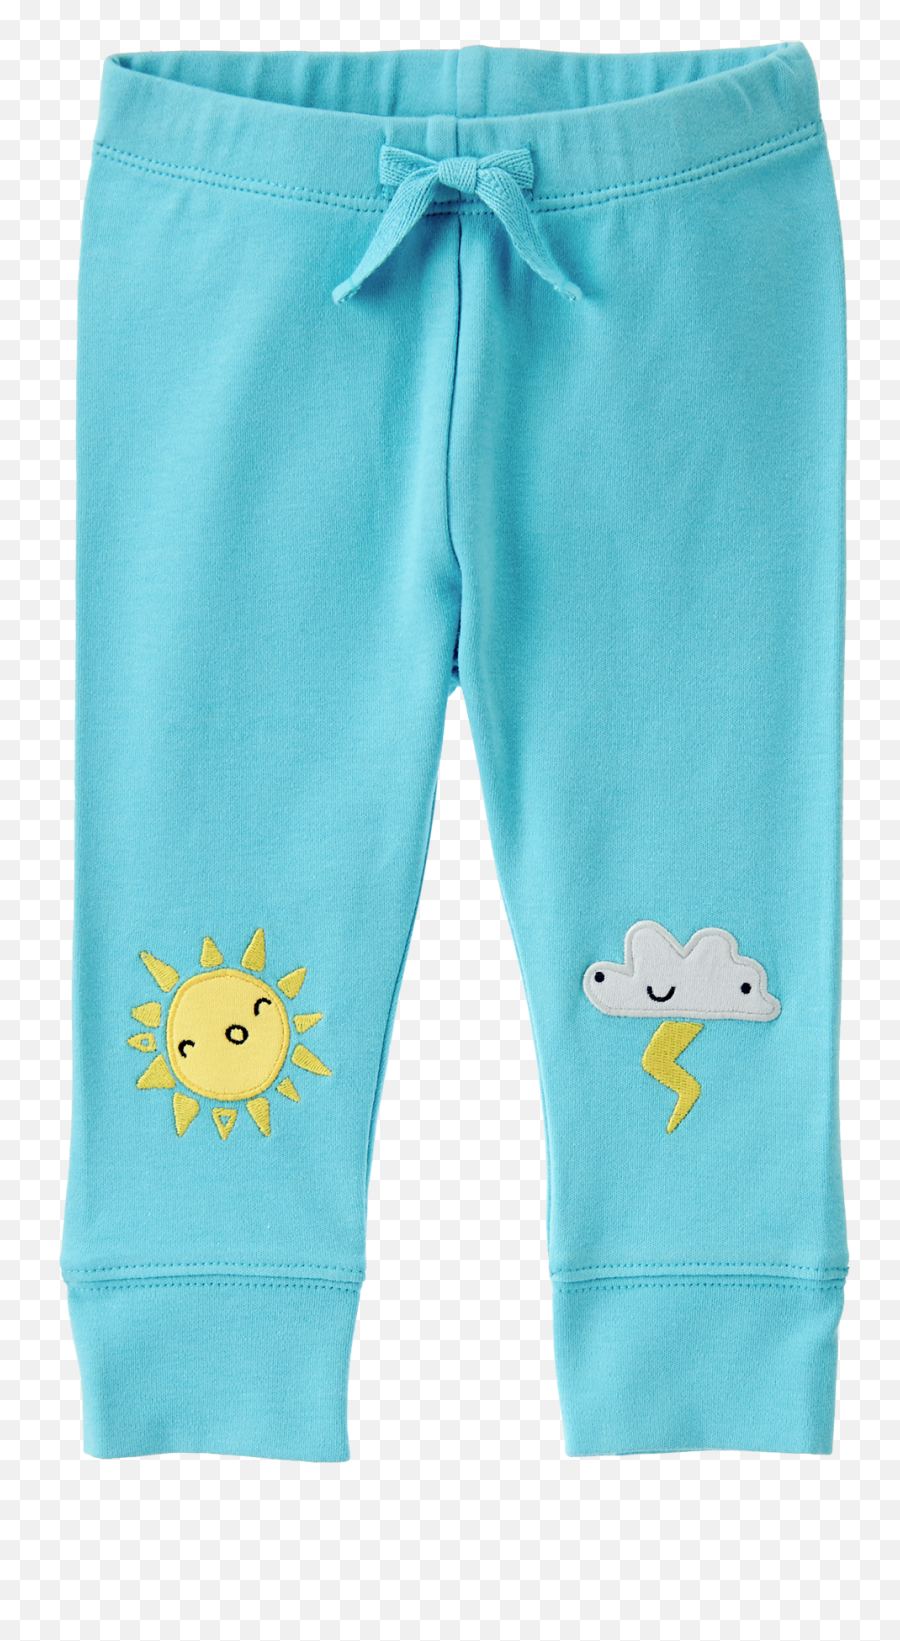 Gymboree Baby Boys Ribbed Leggings Bottoms Clothing Sq Emoji,Fuzzy Emoji Pajamas For Kids